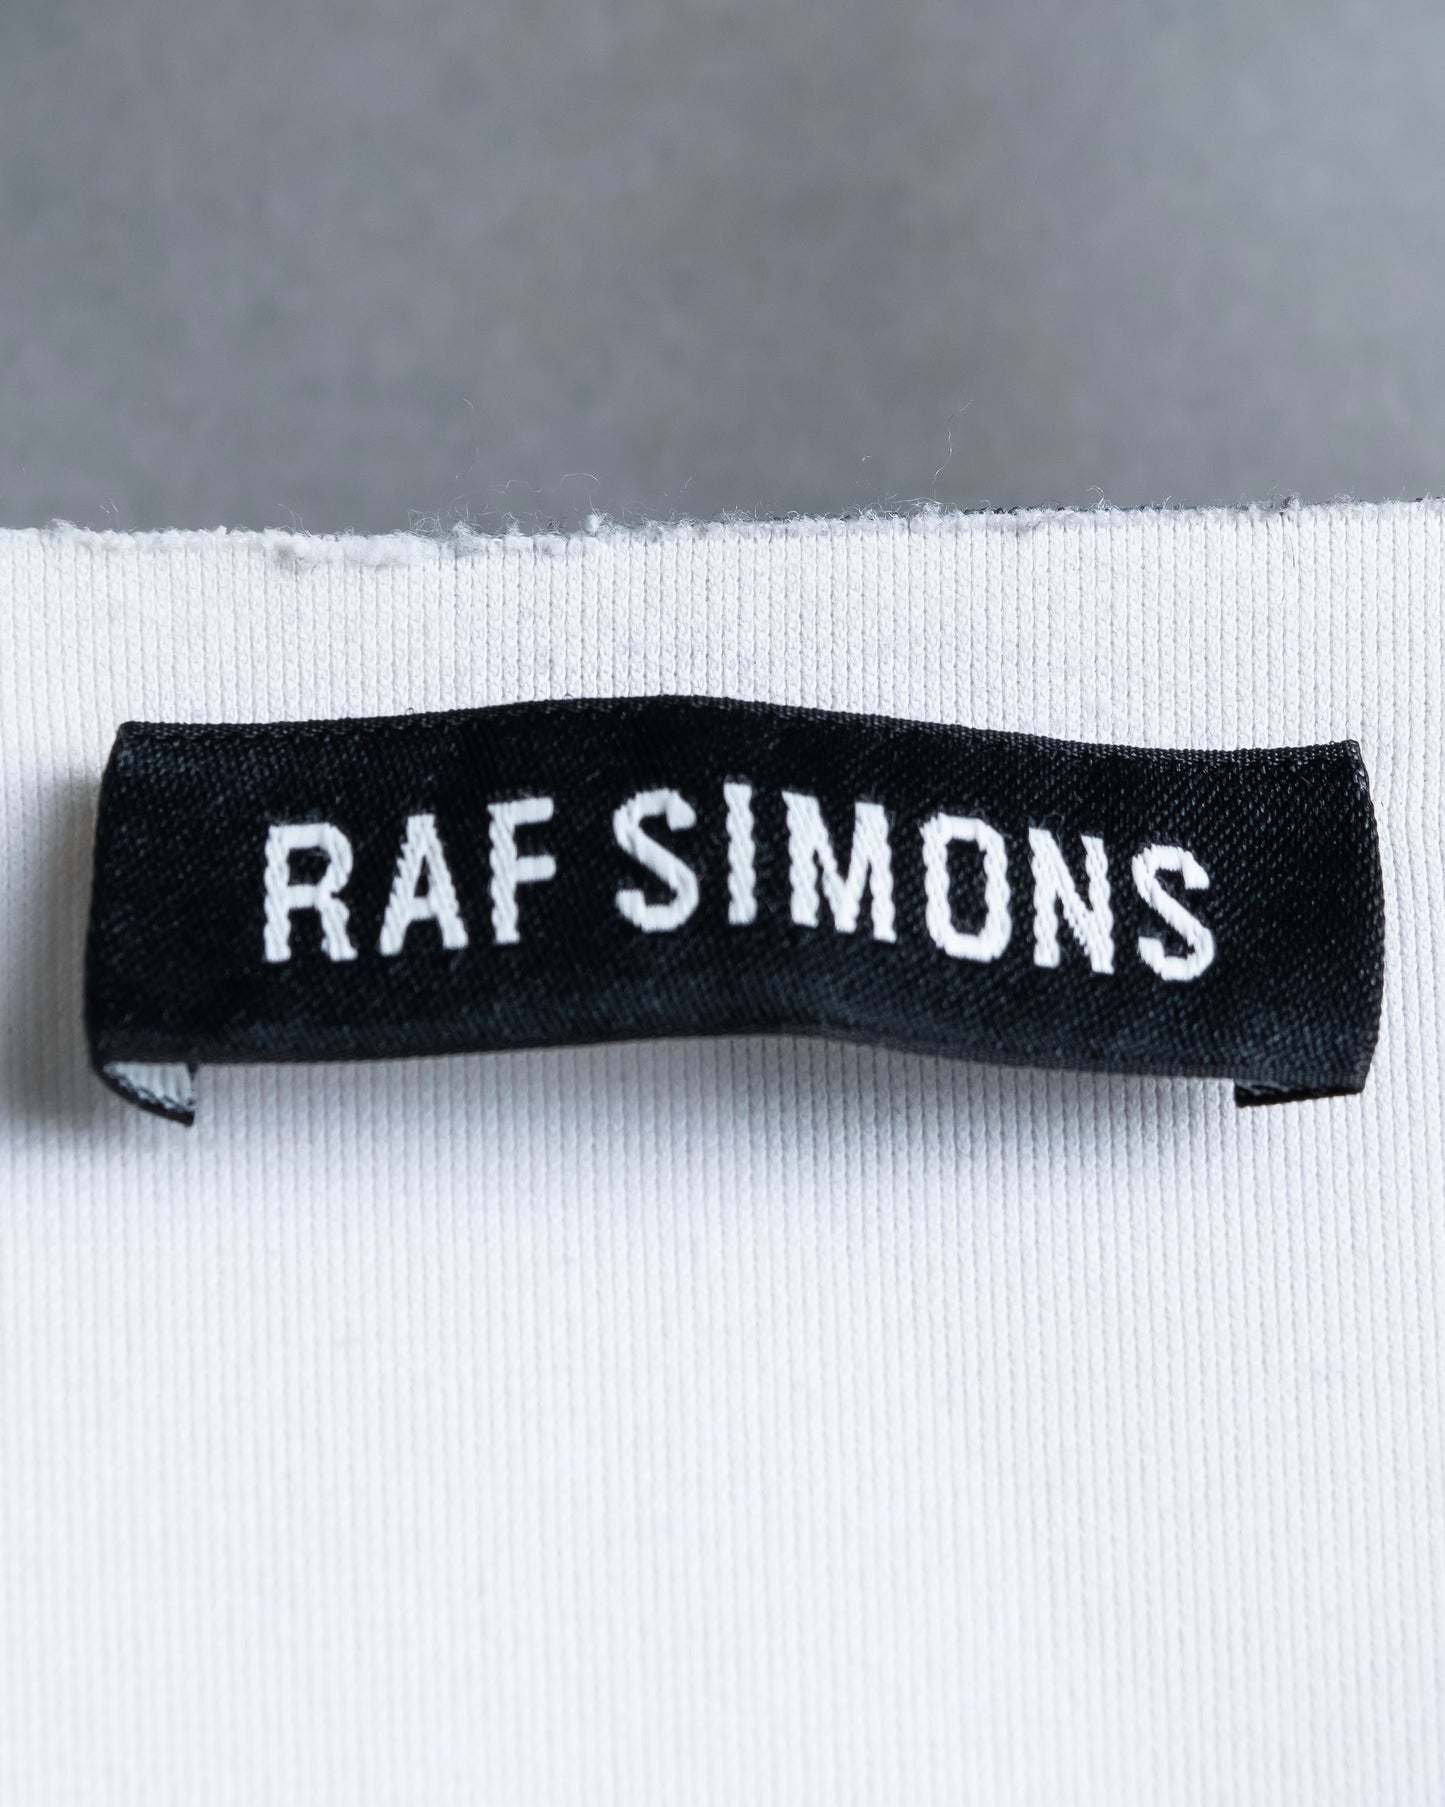 "RAF SIMONS" 14ss Neoprene graphic sleeveless T-shirt